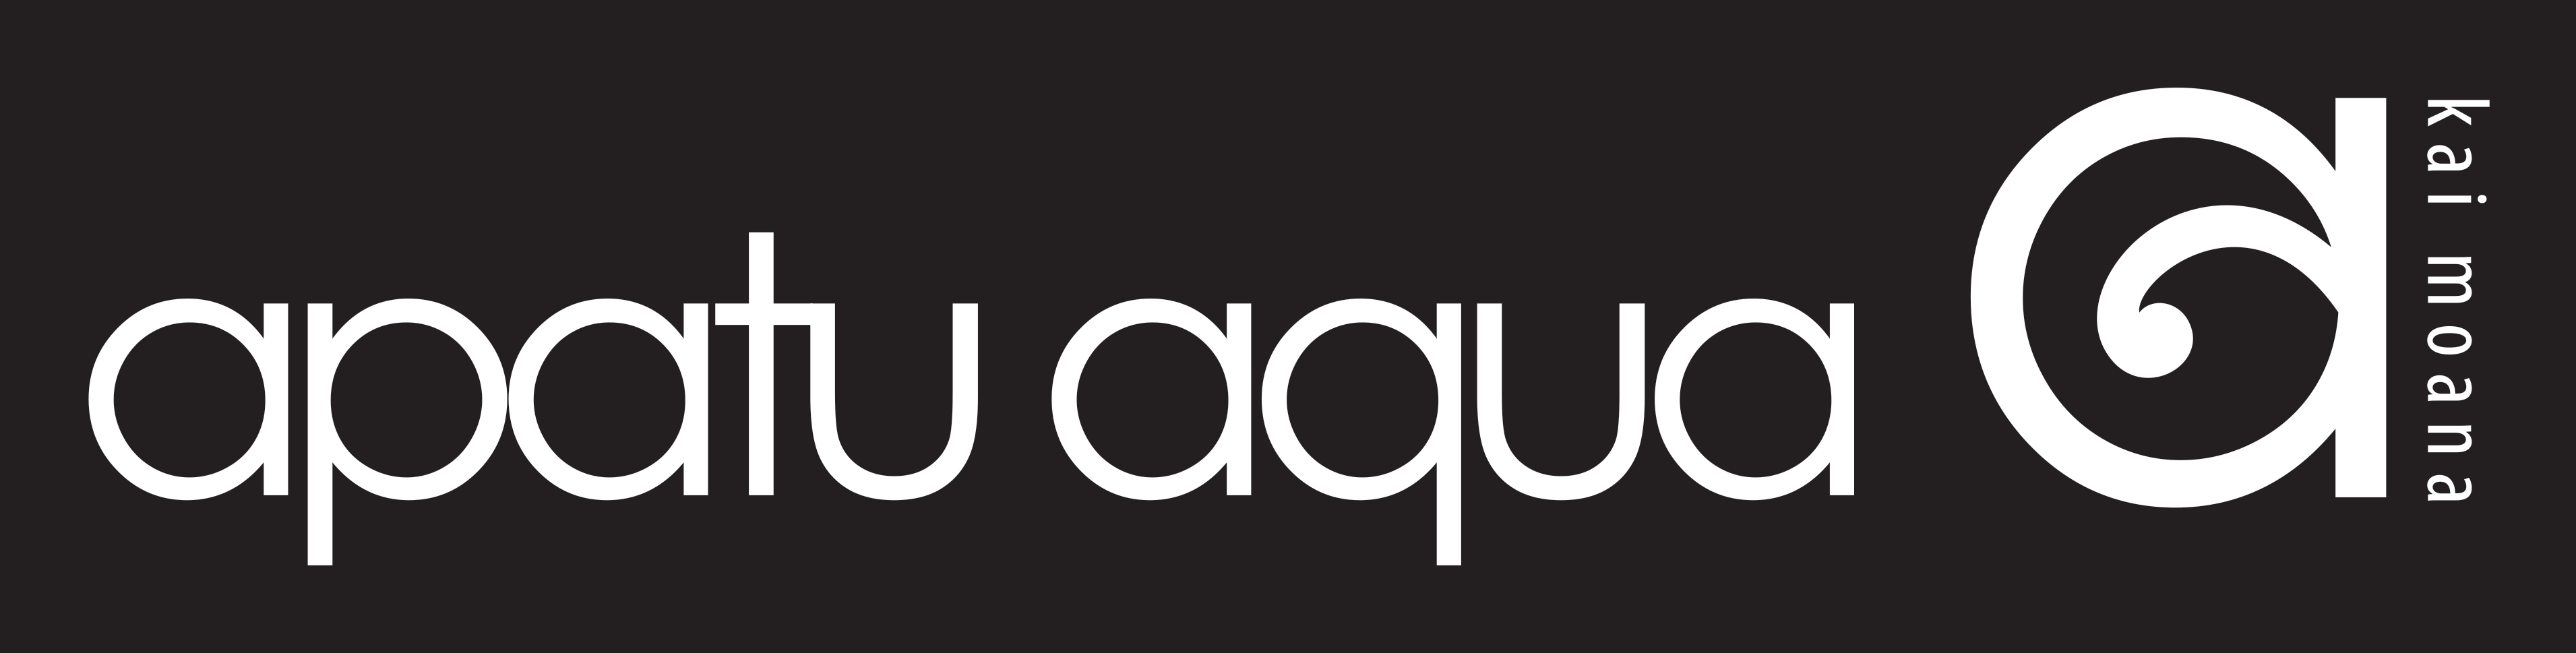 Image result for apatu aqua logo